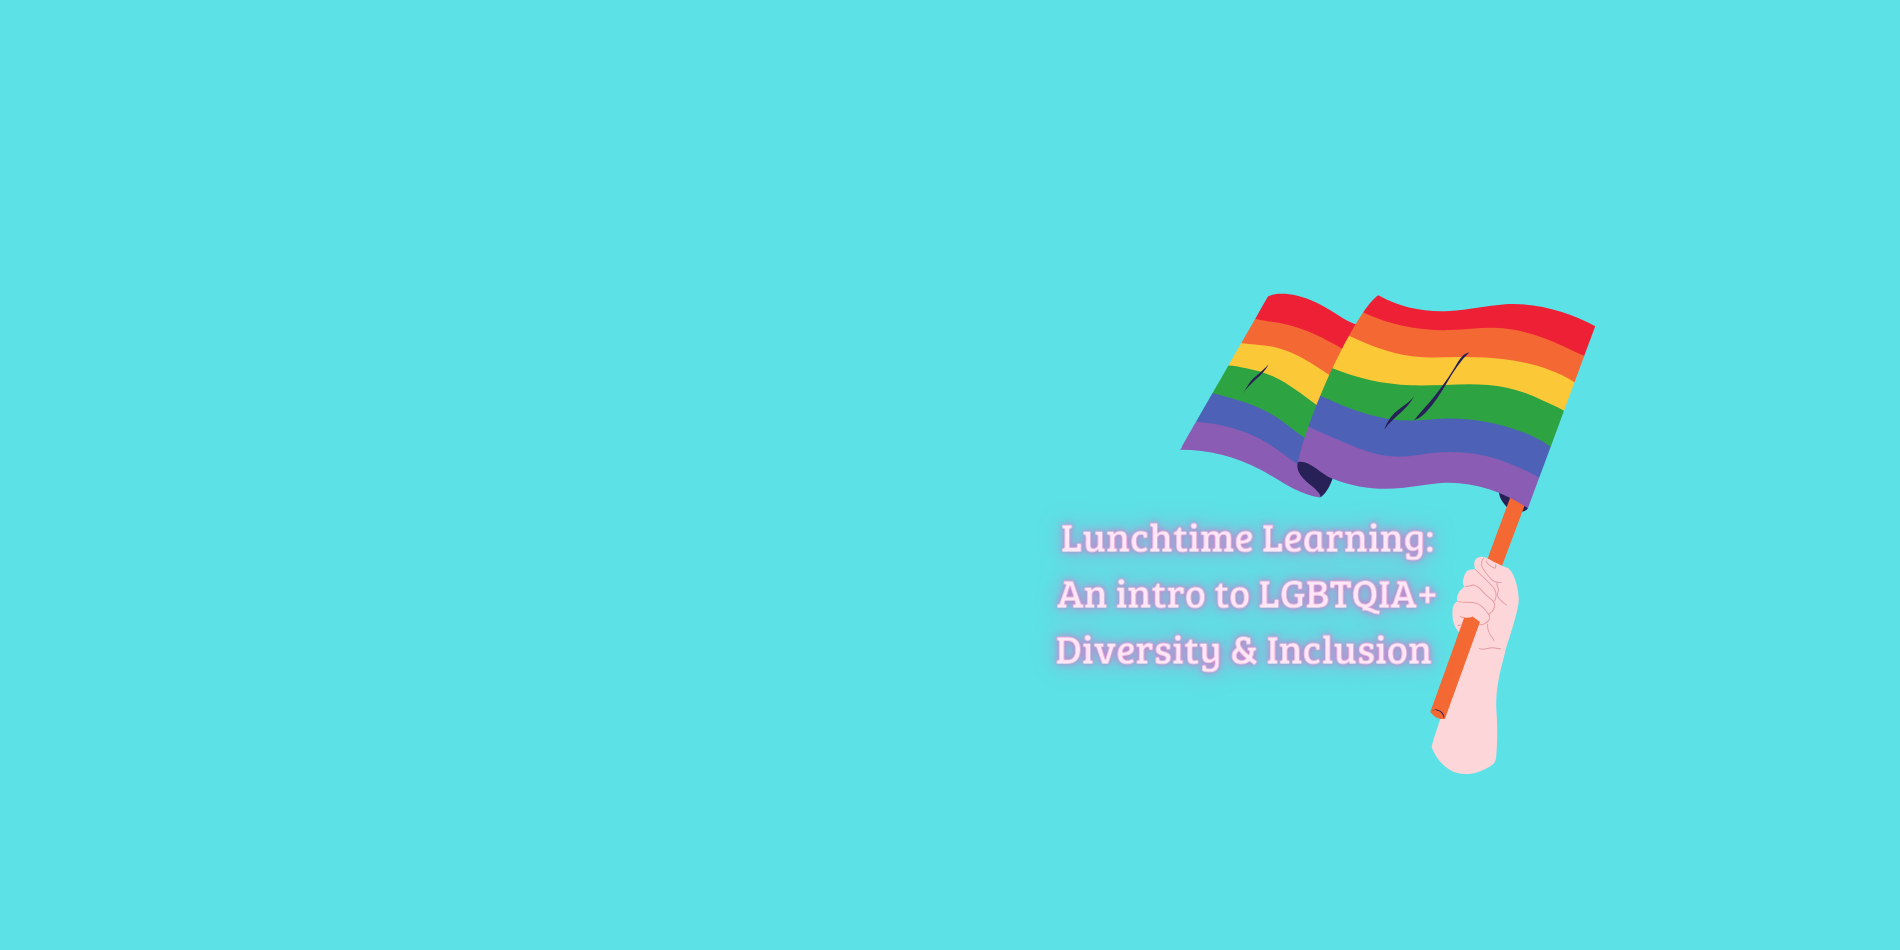 An intro to LGBTQIA+ Diversity & Inclusion.